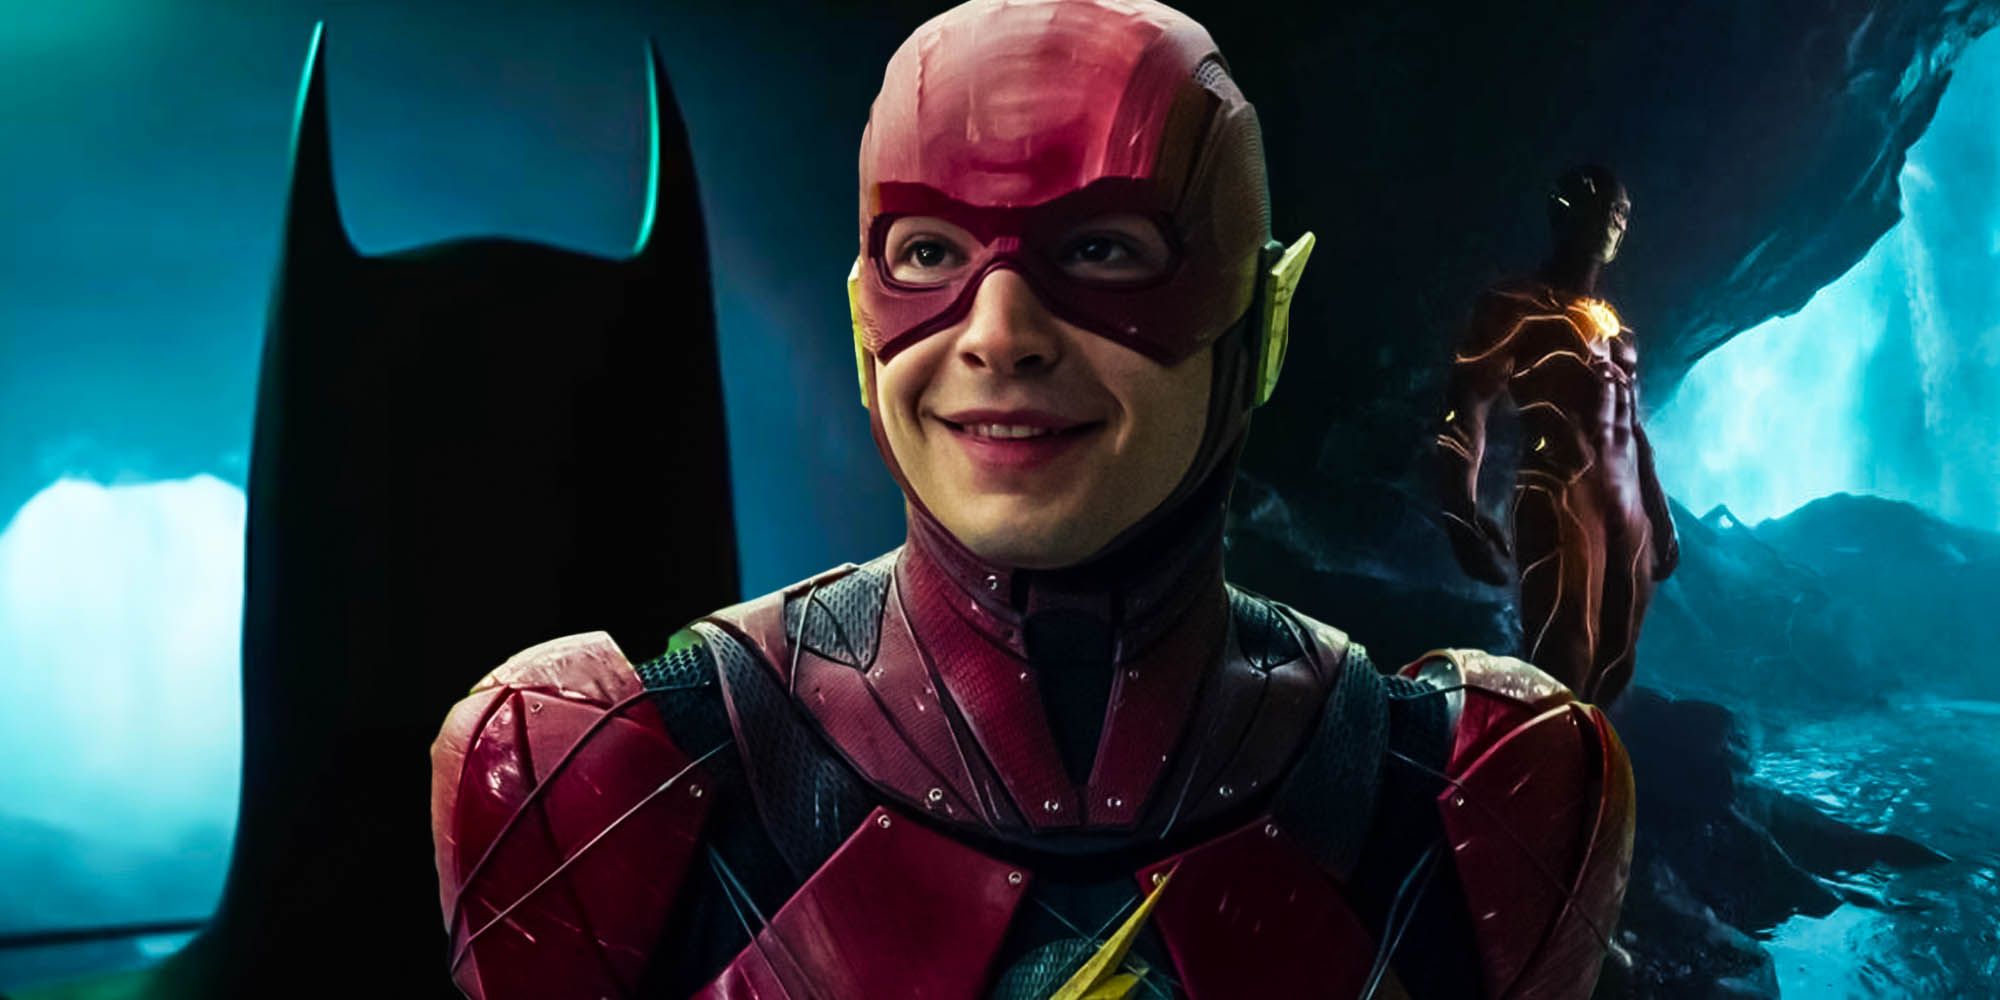 Michael Keaton as Batman and Ezra Miller as The Flash